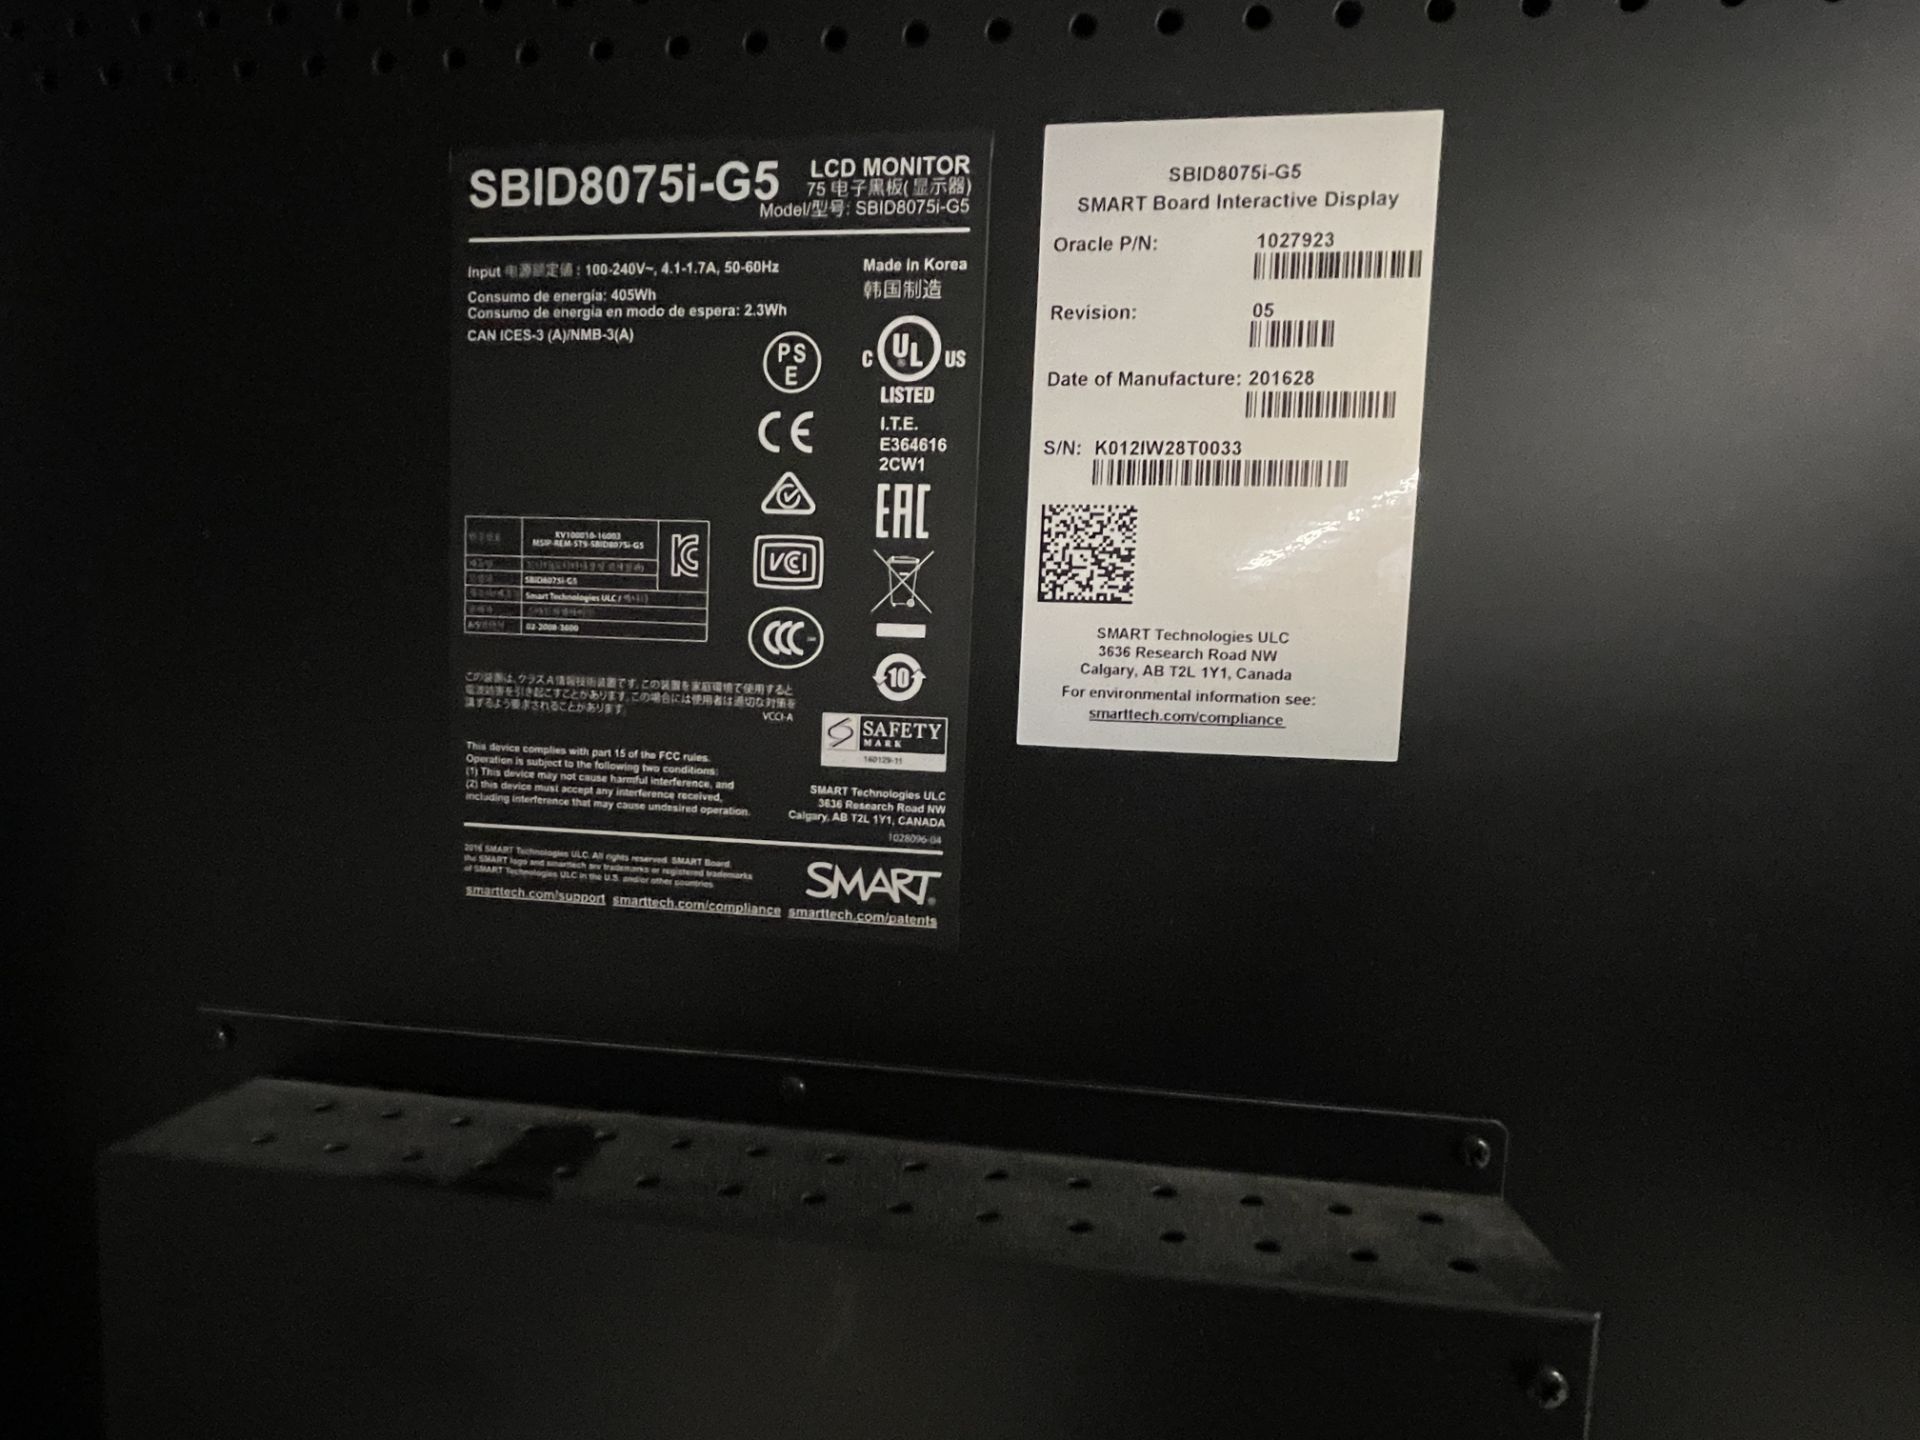 Interactive Smartboard Model SBID80751-G5 - Image 2 of 3